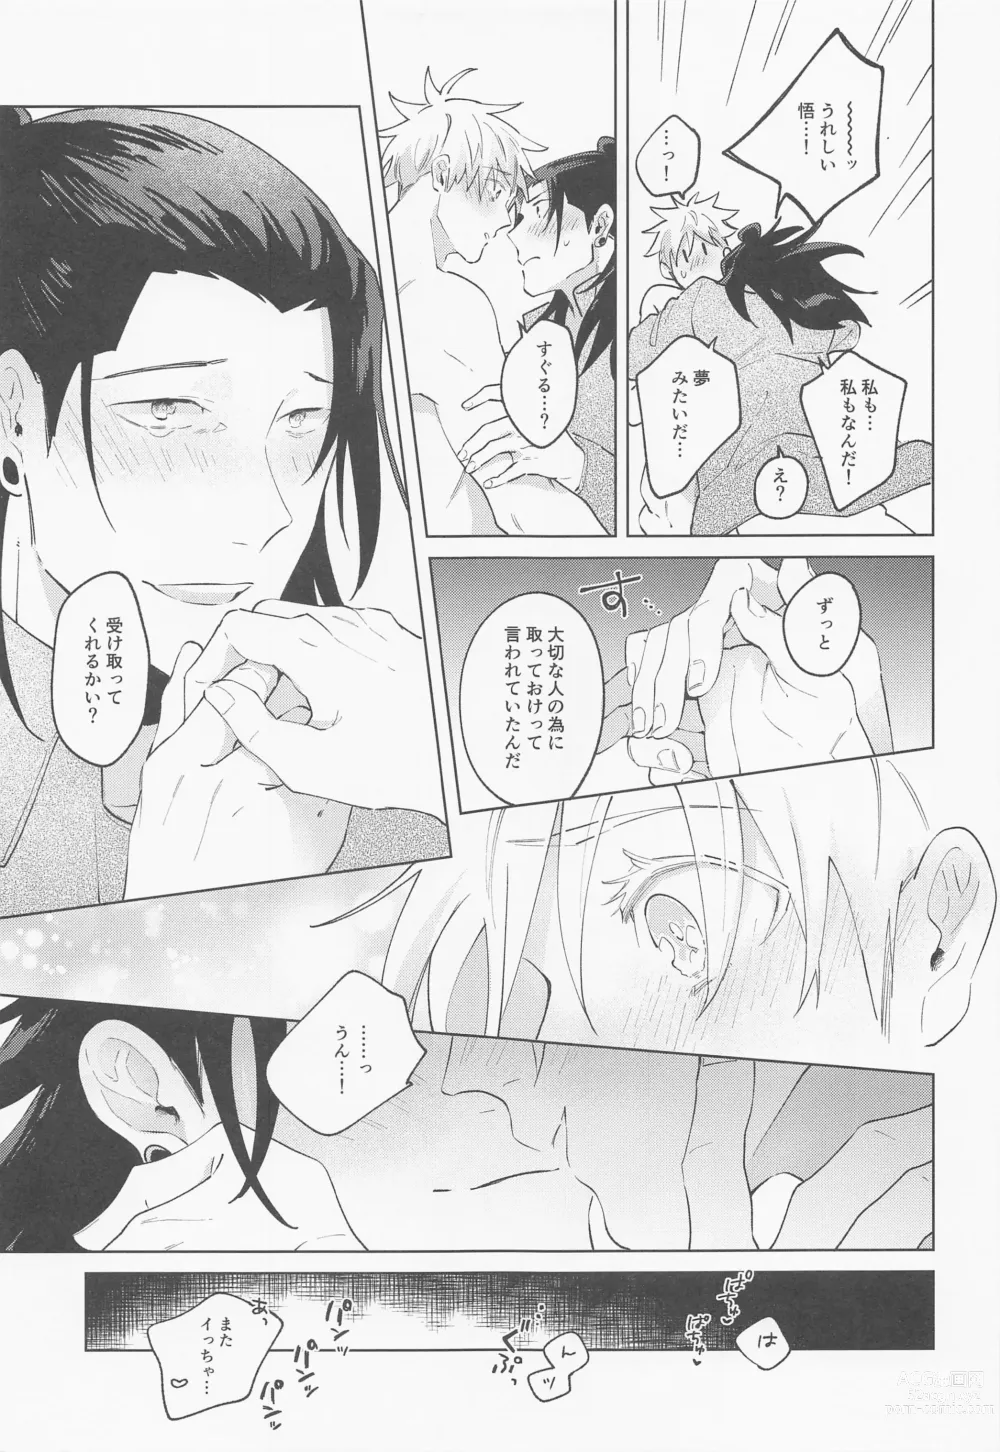 Page 54 of doujinshi Say you love me!